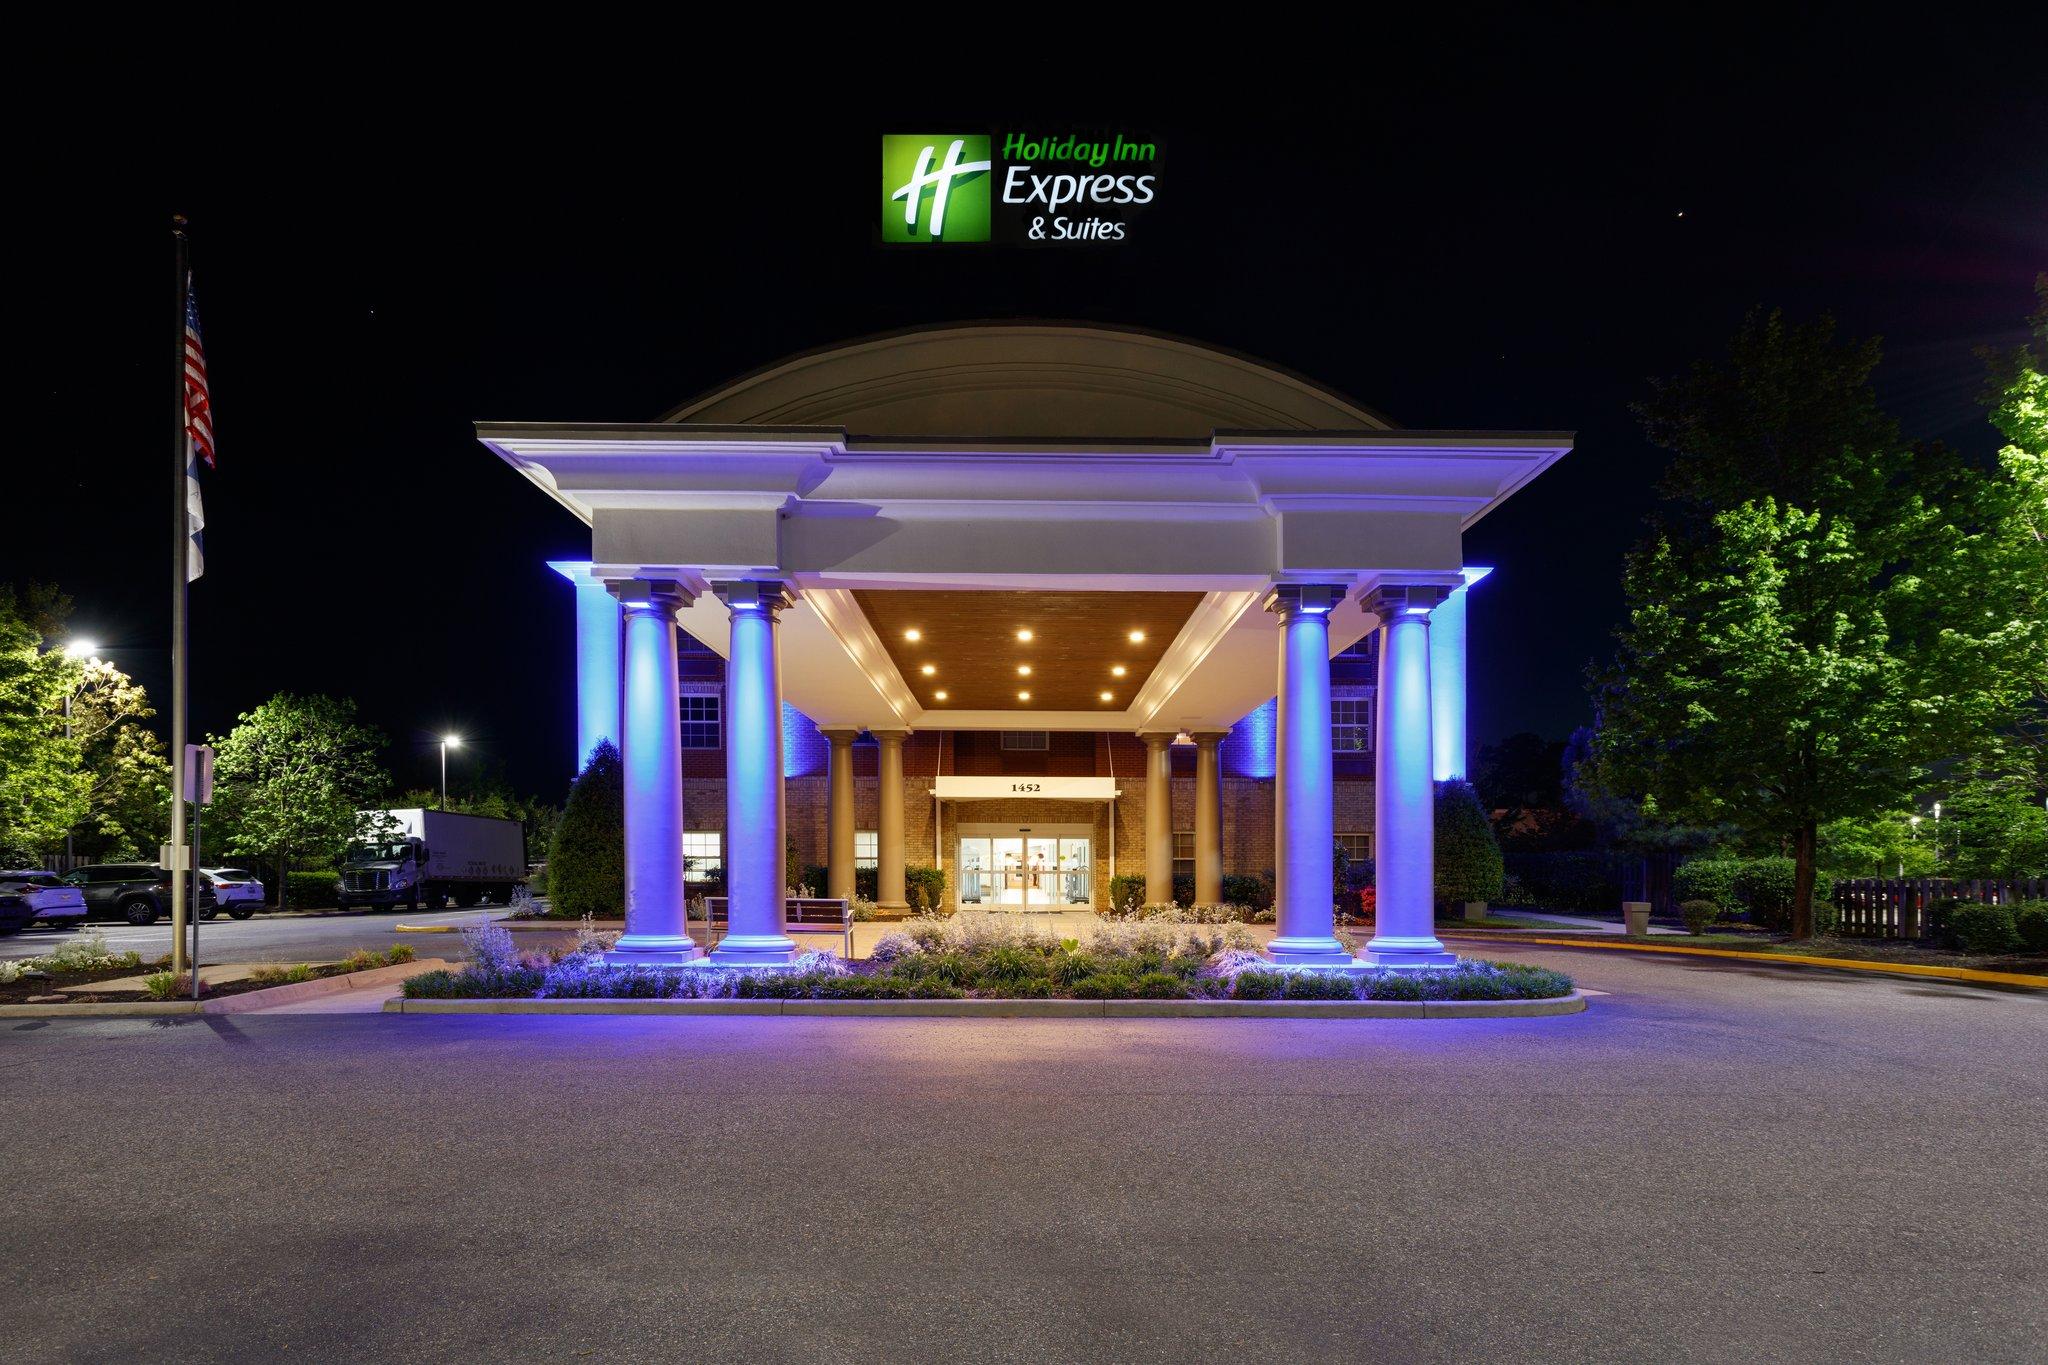 Holiday Inn Express Hotel & Suites Williamsburg in Williamsburg, VA